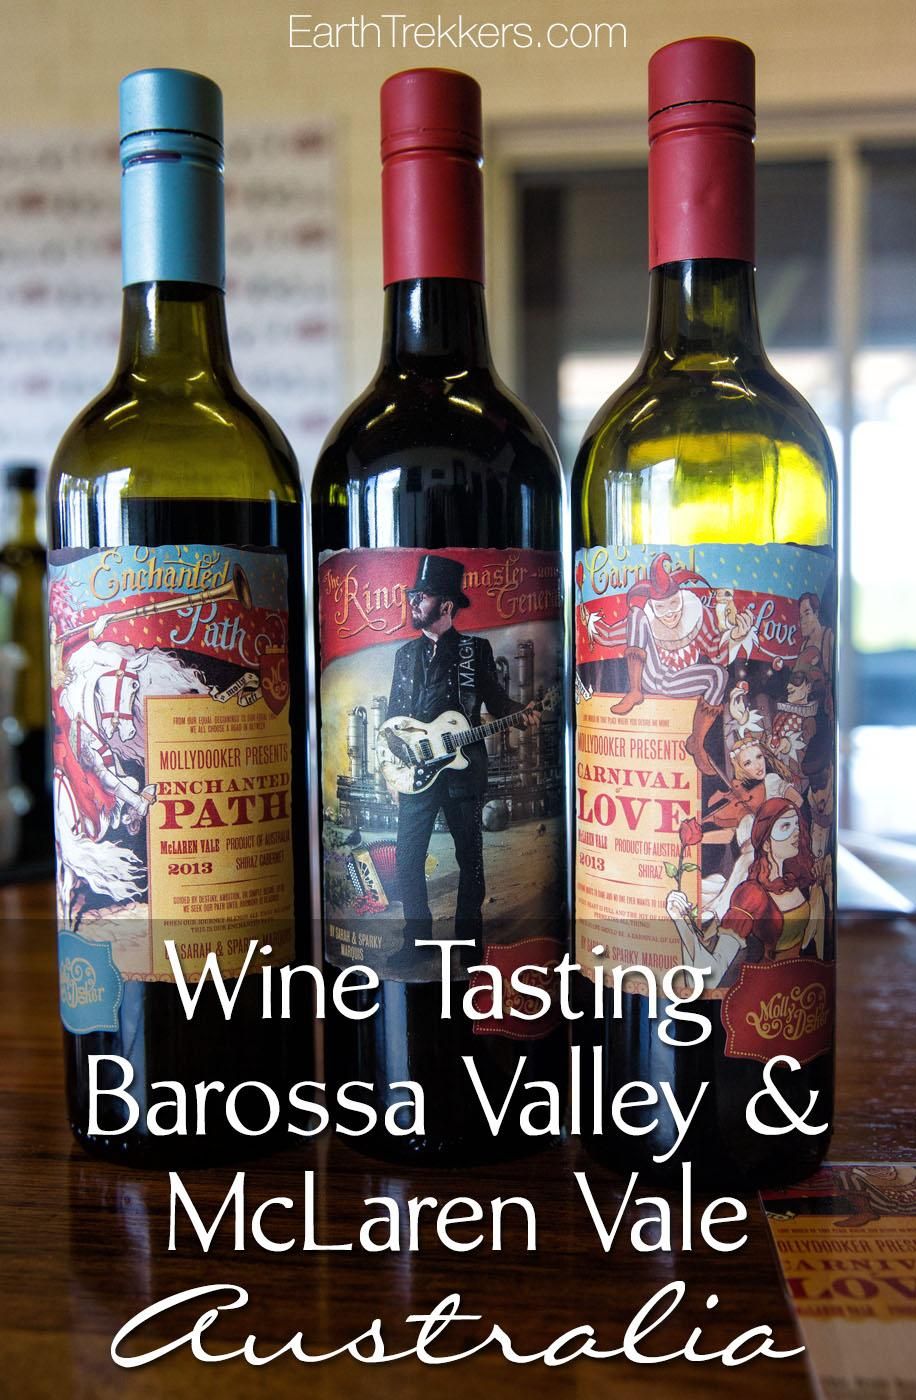 Barossa Valley Mclaren Vale wine tasting